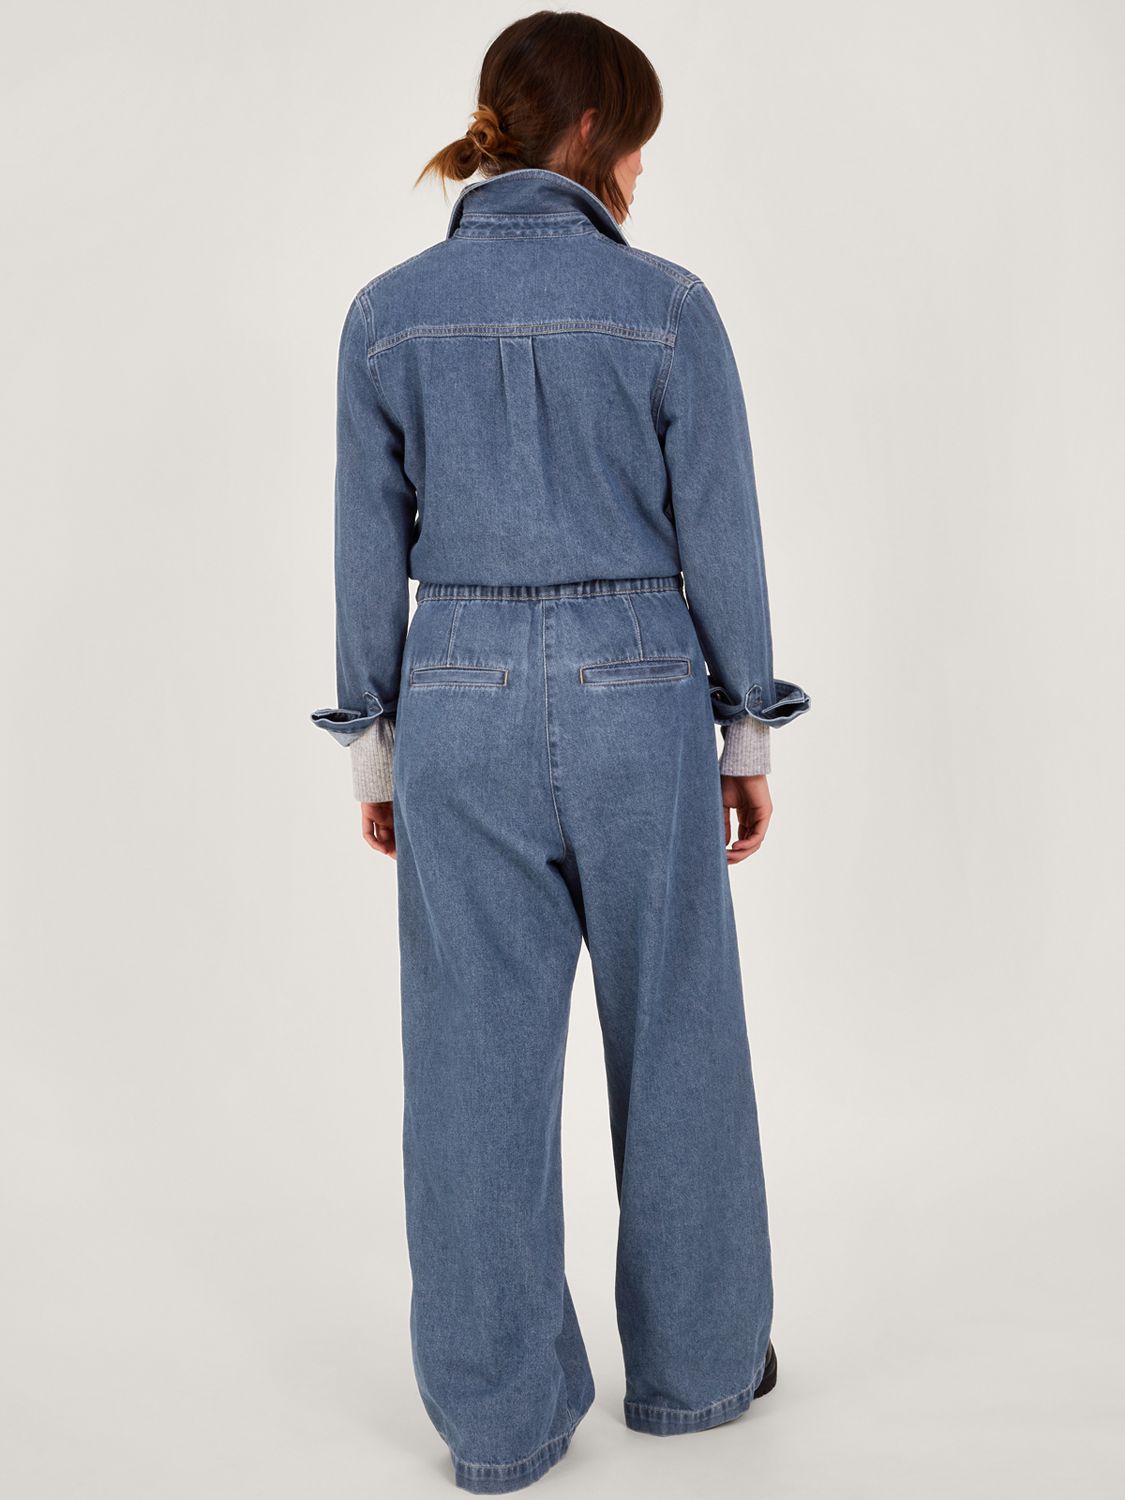 Yumi Light Denim Culotte Jumpsuit, Blue at John Lewis & Partners